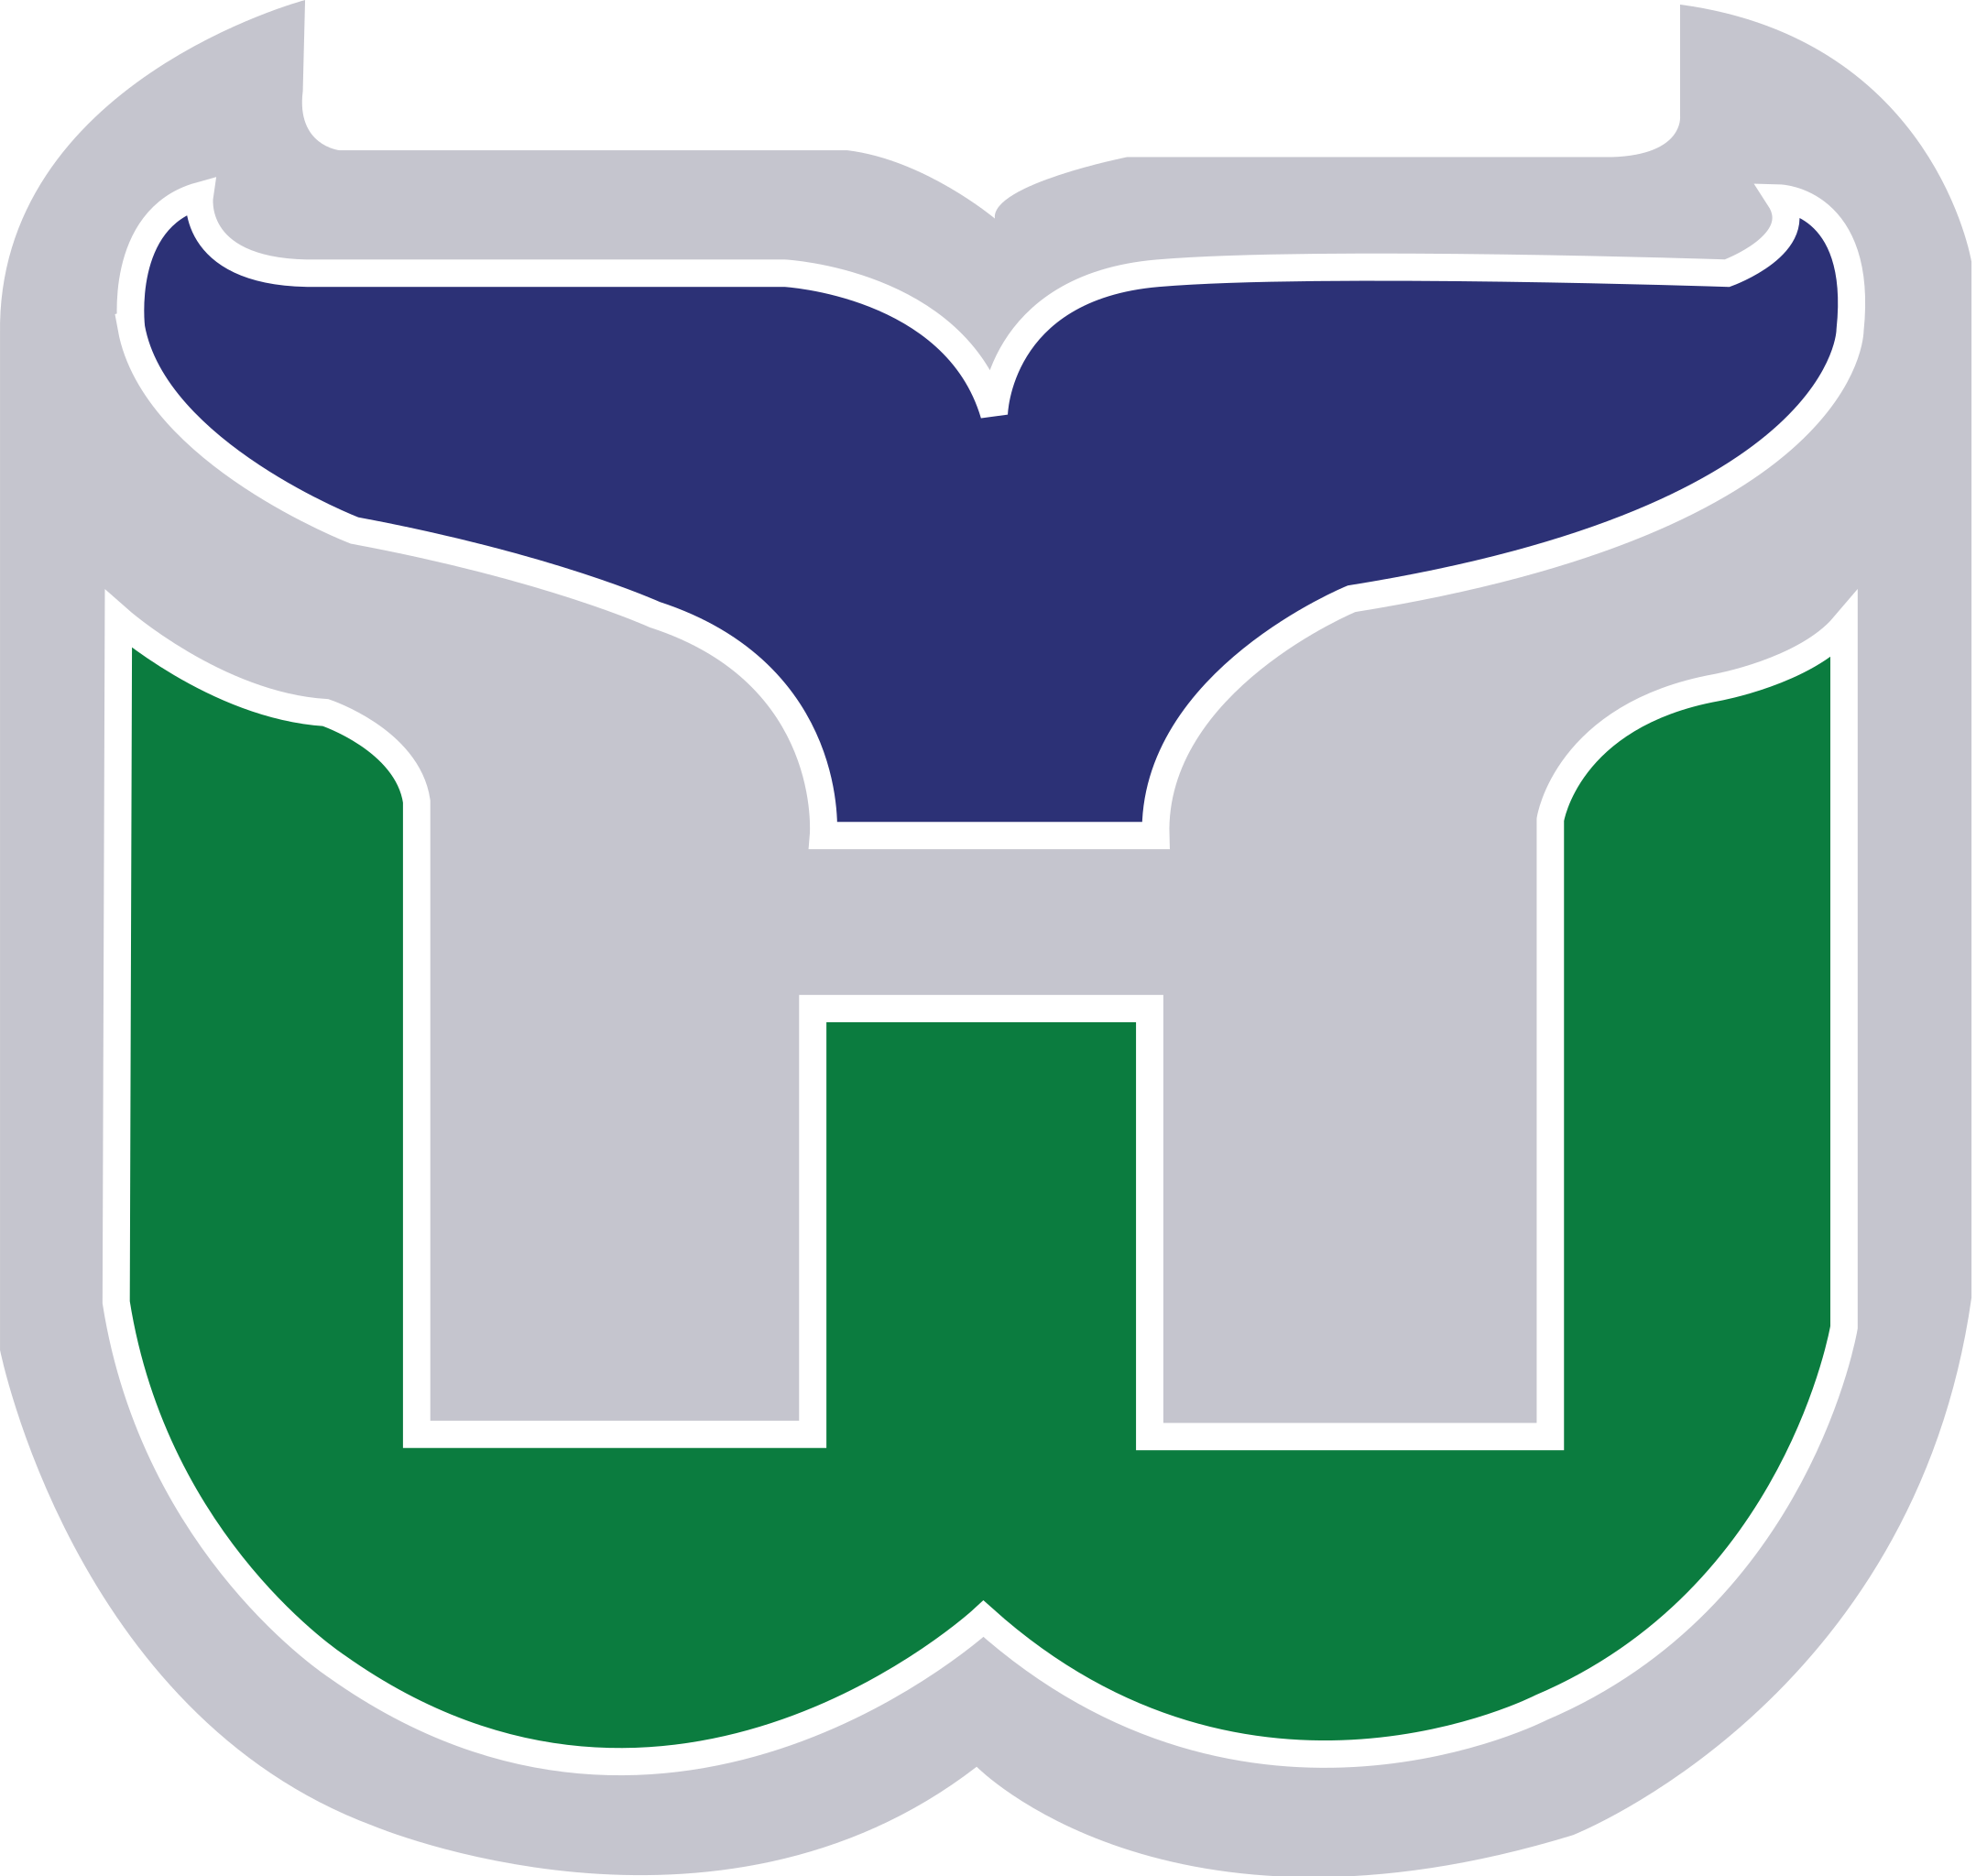 File:Ford logo.svg - Wikipedia